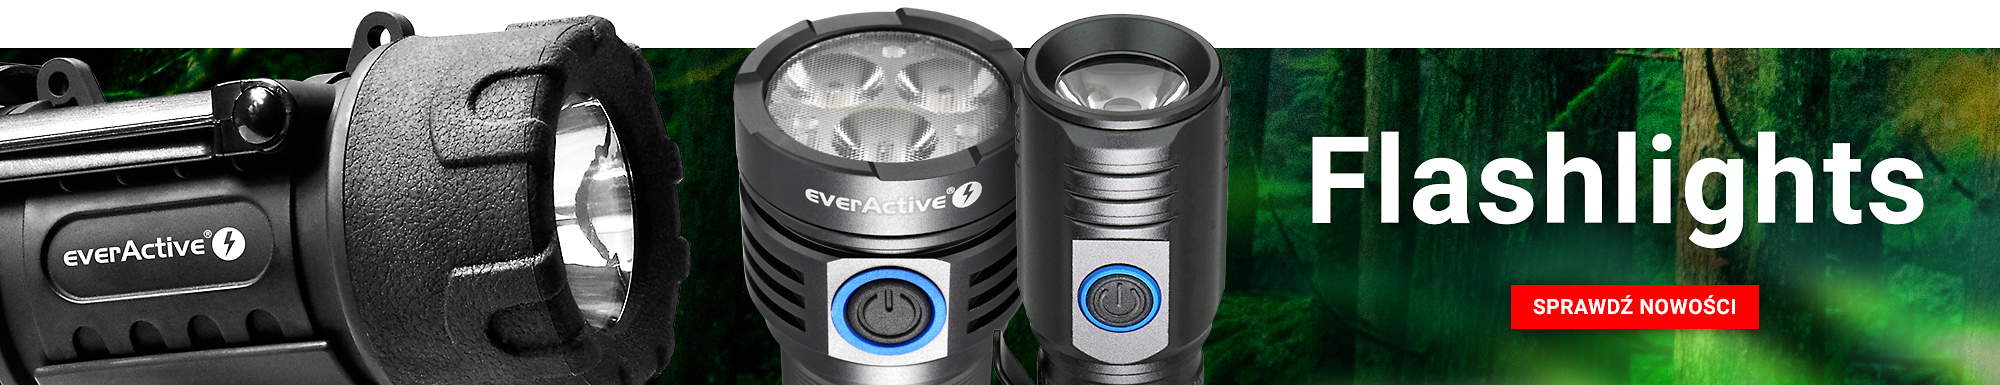 everActive New Flashlights